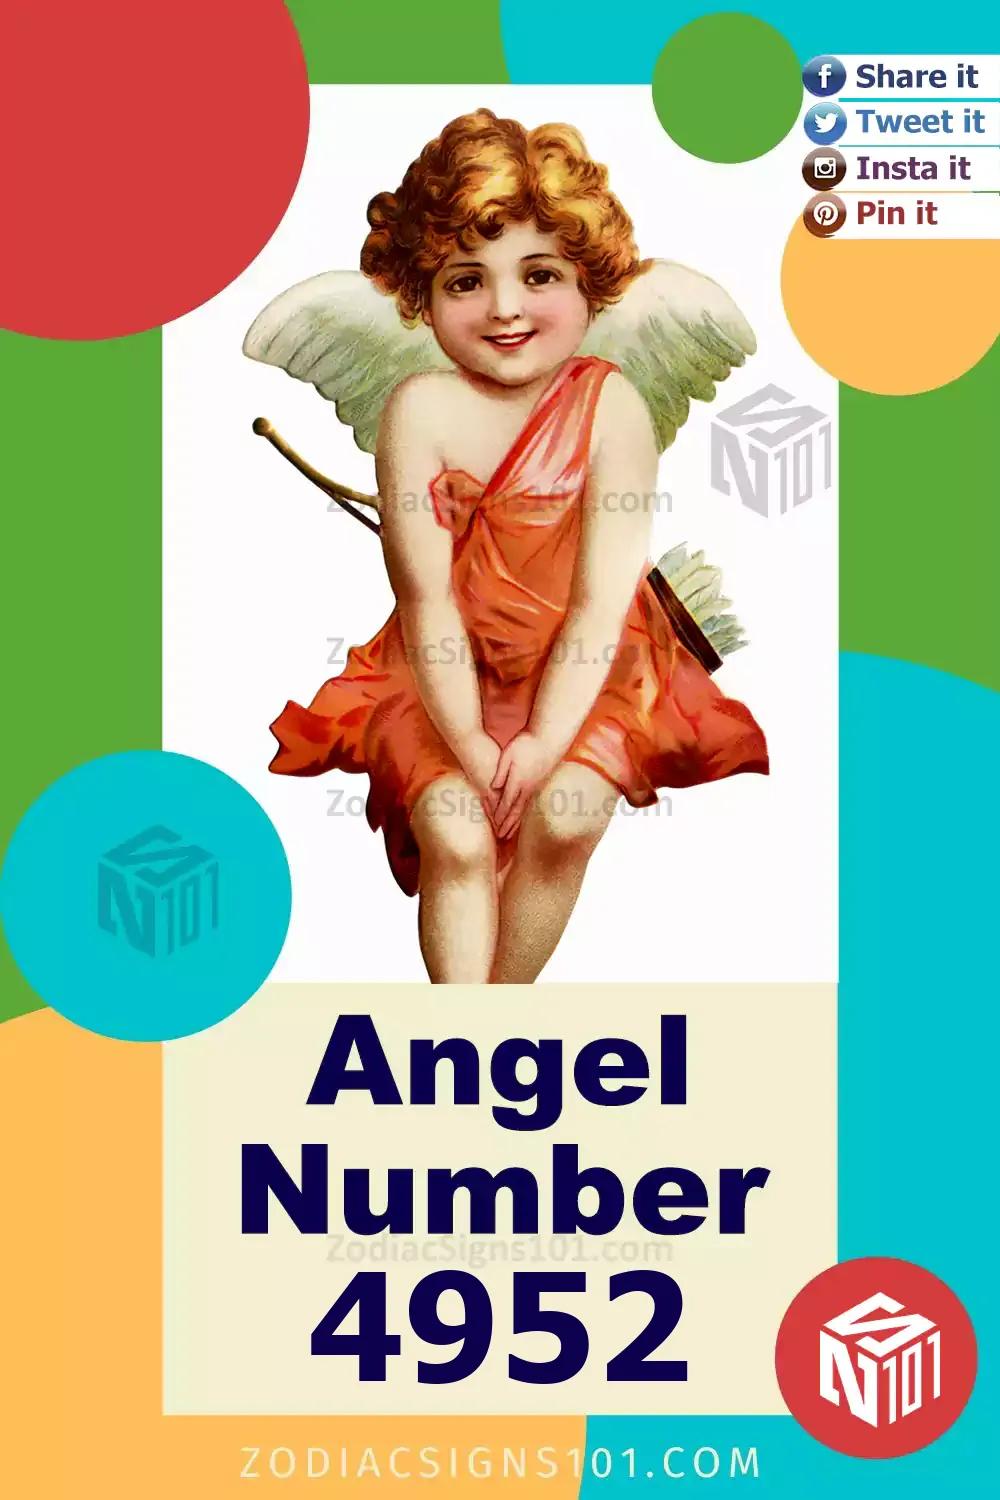 4952-Angel-Number-Meaning.jpg